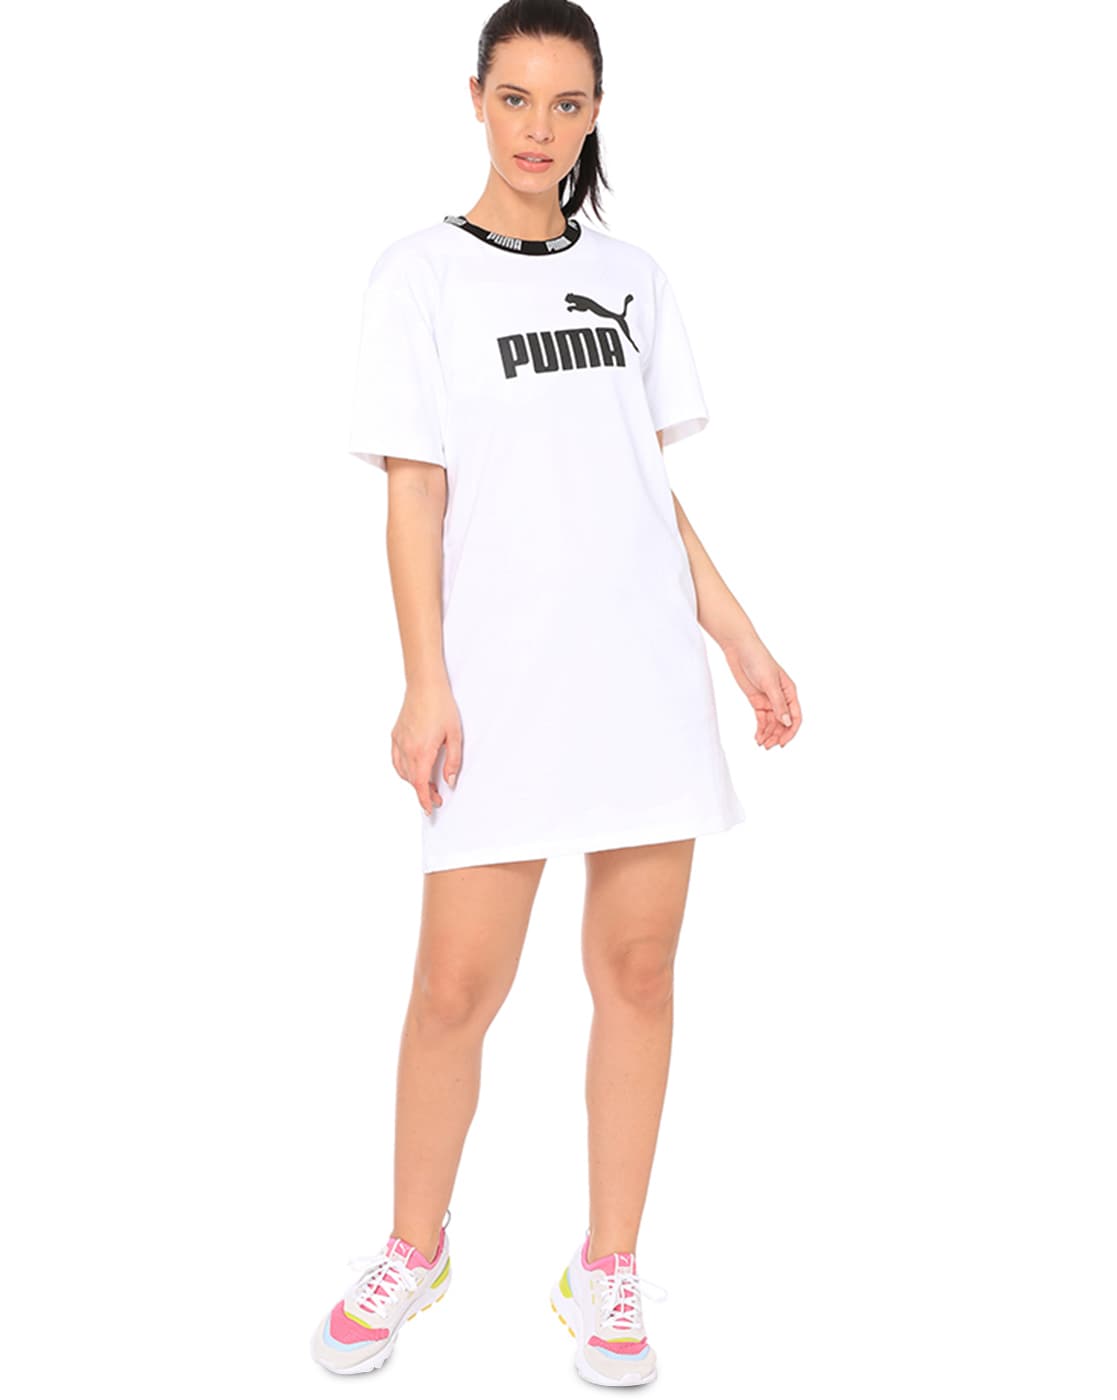 puma white dress